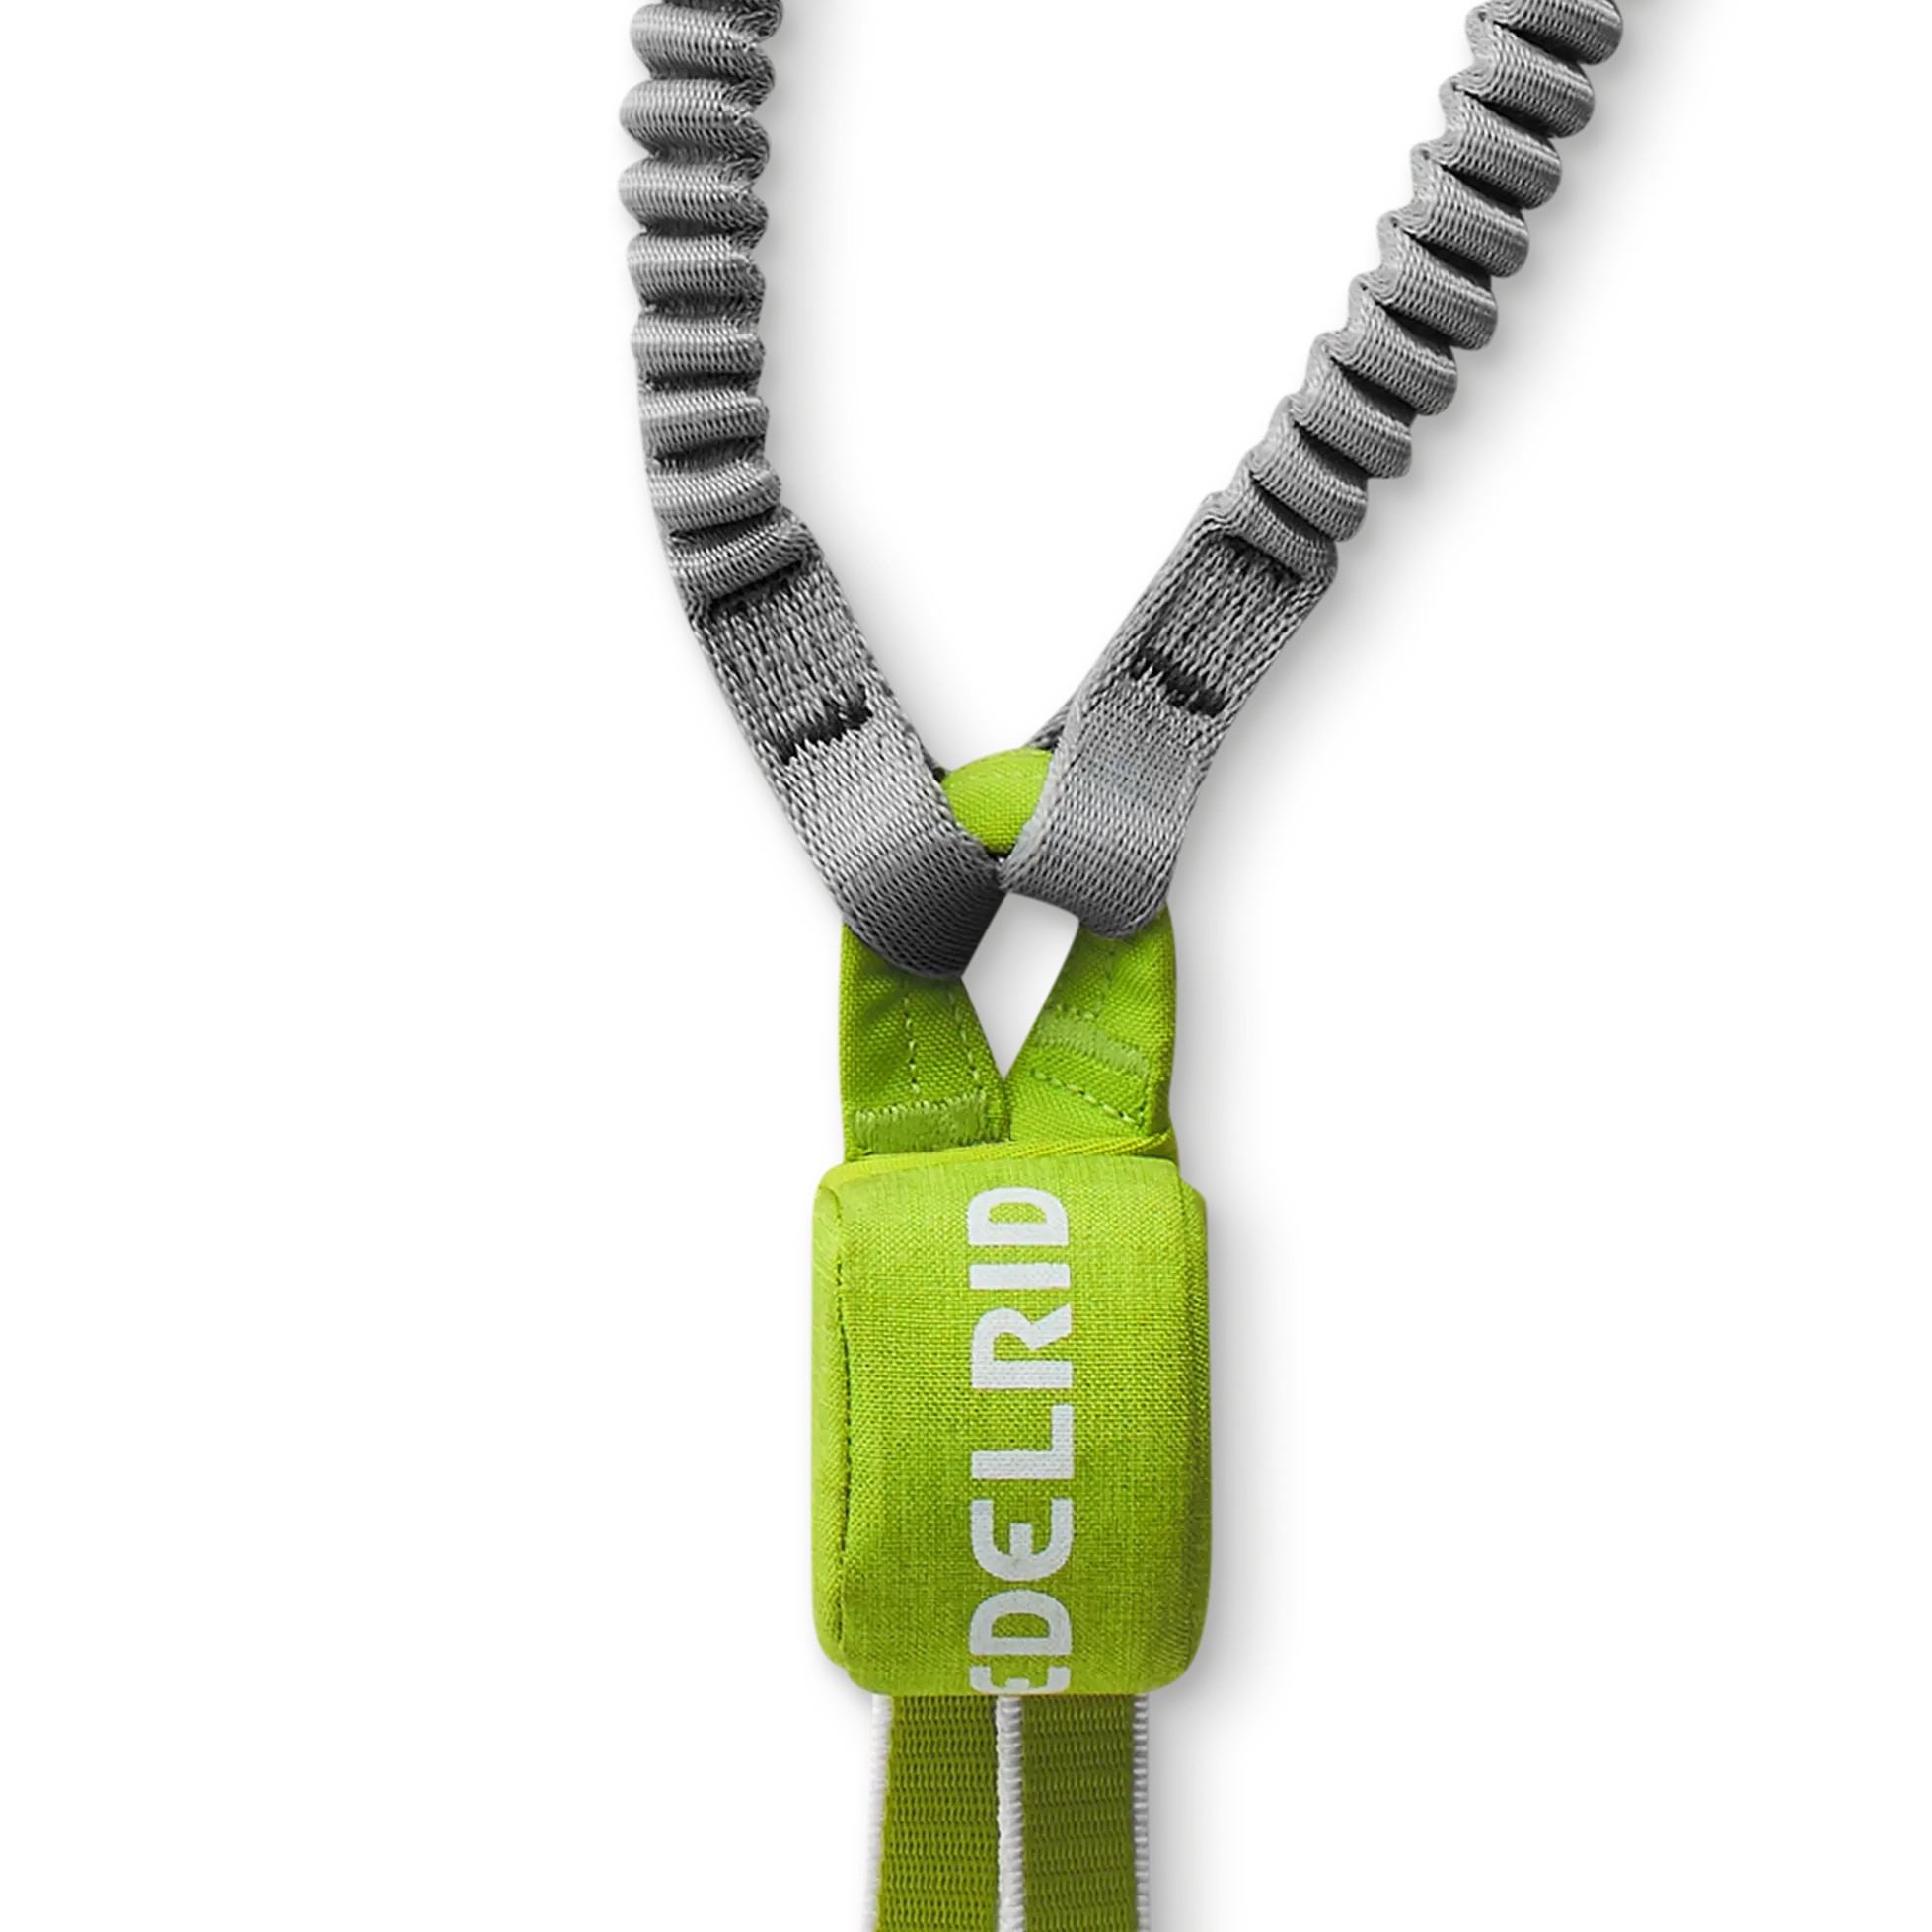 Edelrid Cable Kit Lite 6.0 Via Ferrata Climbing Set